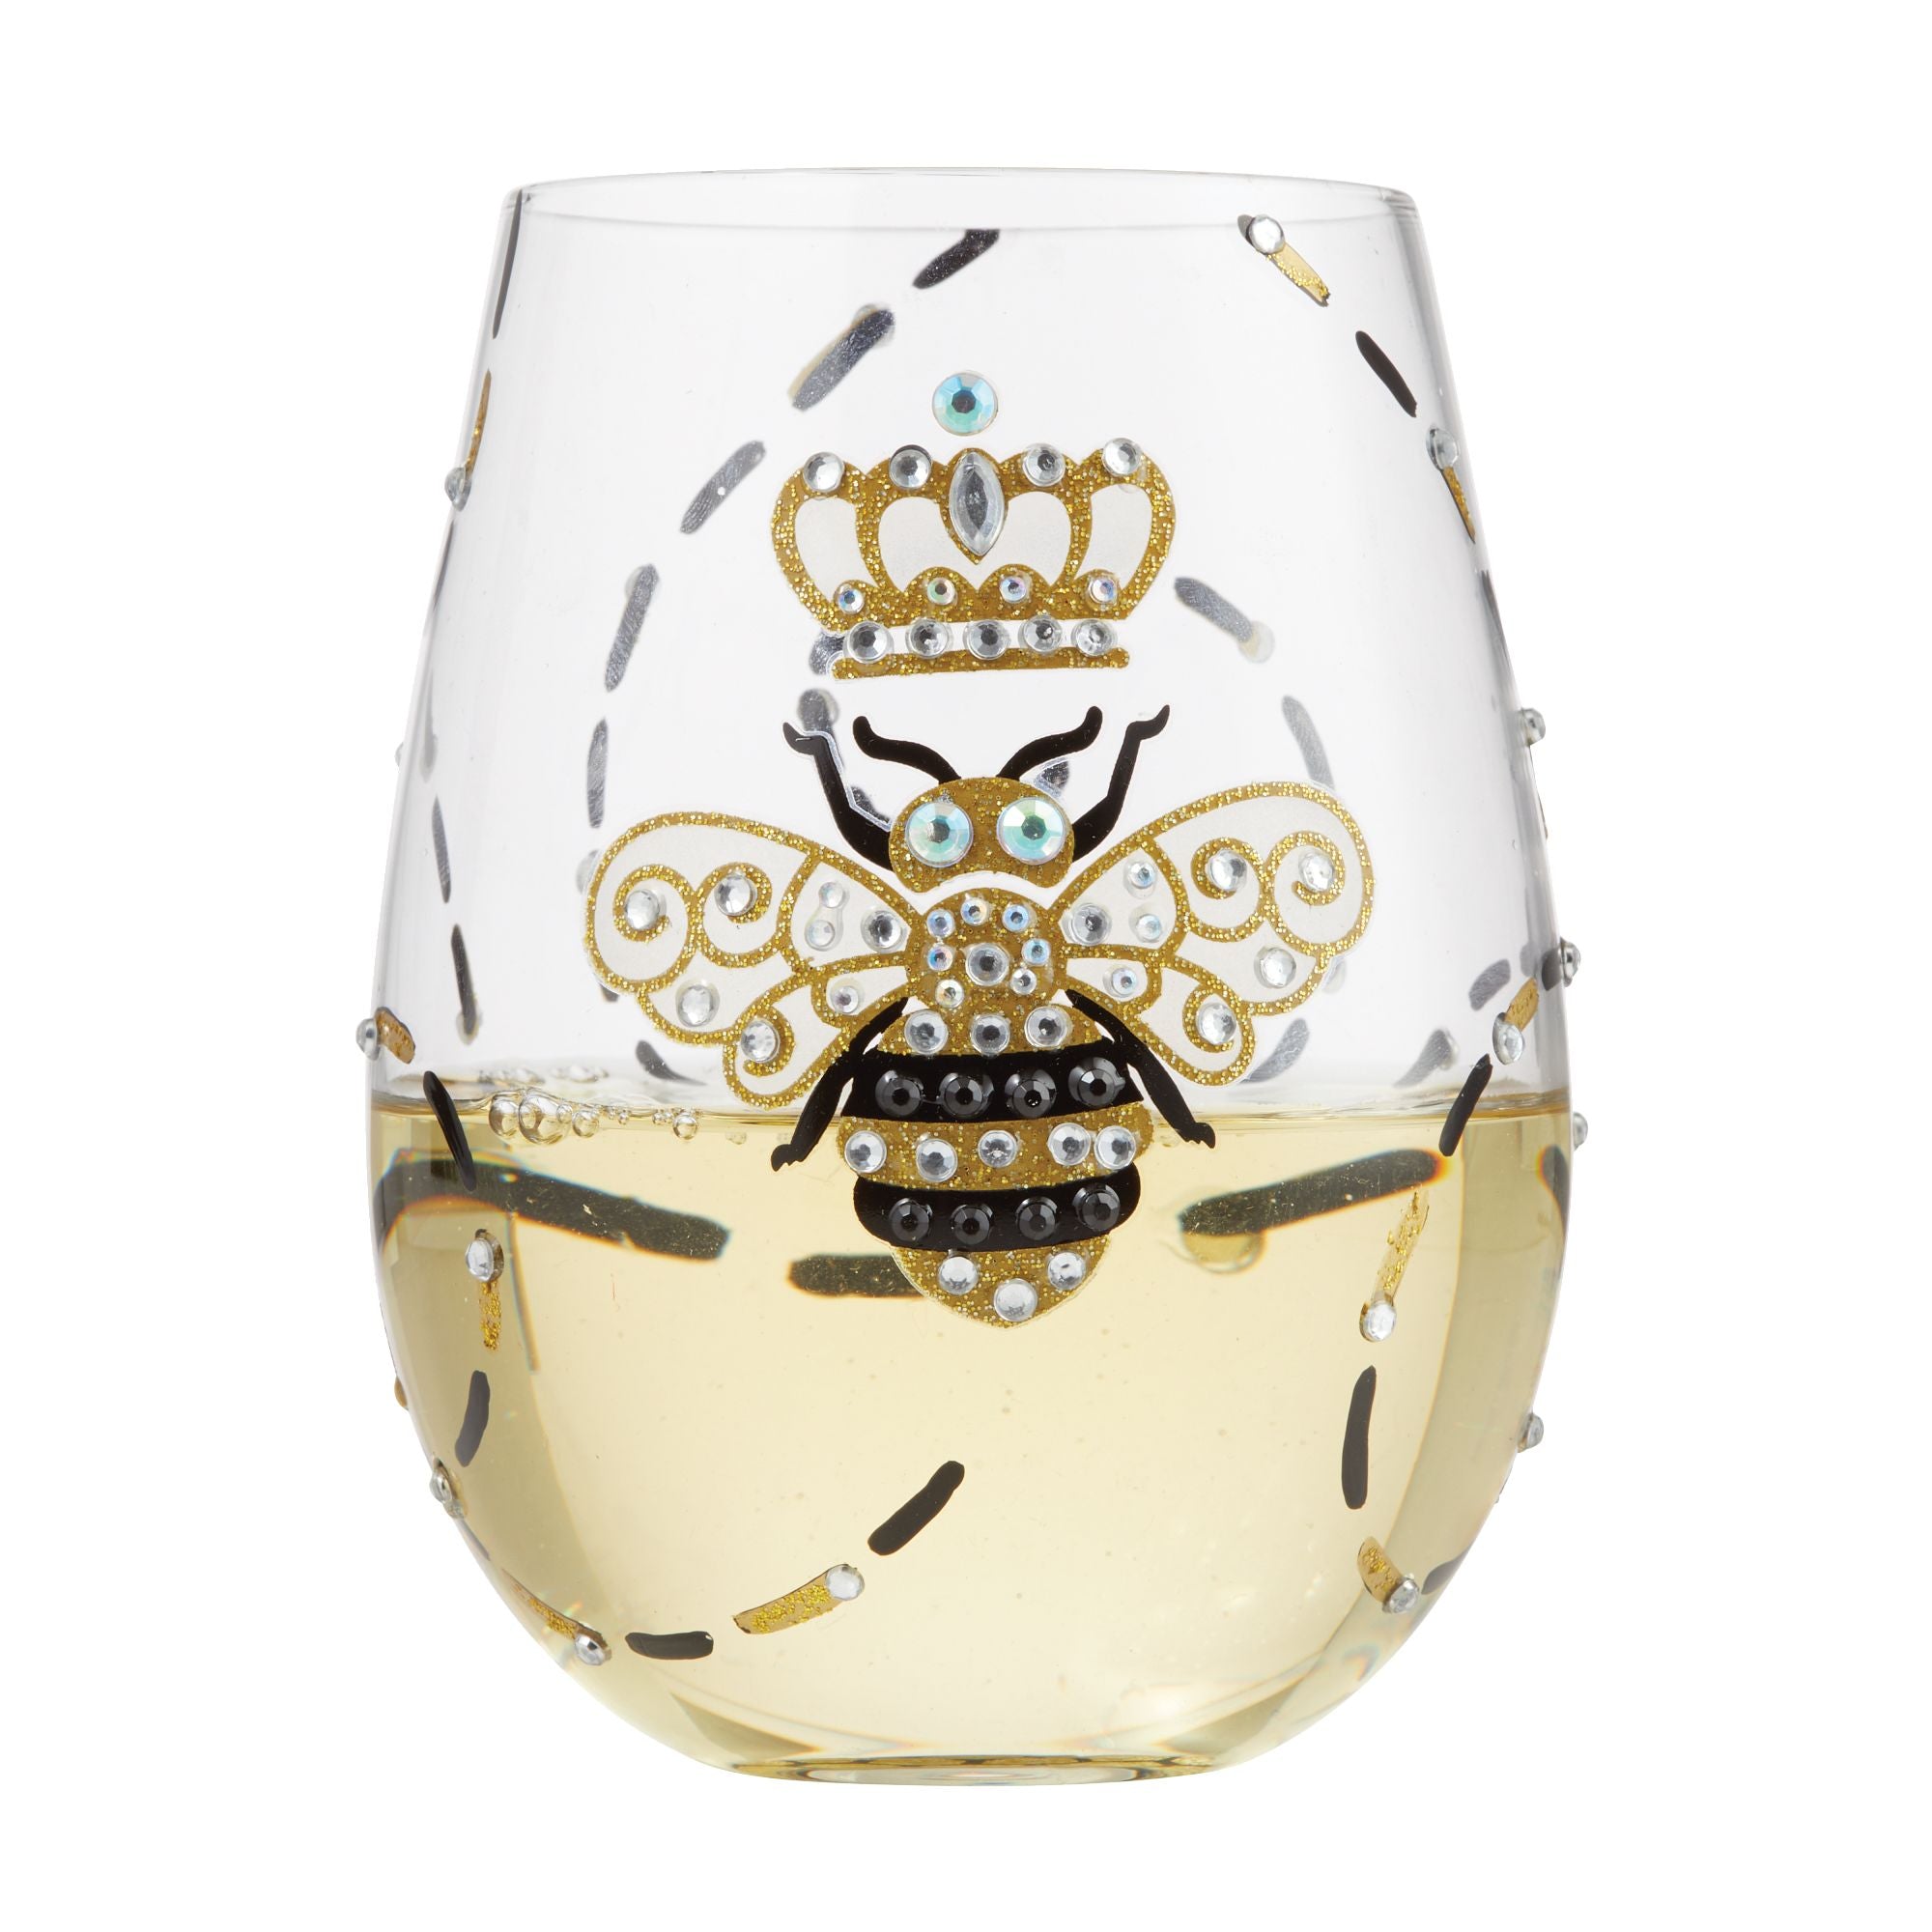 Lolita Jungle Beauty Handpainted Stemless Wine Glass, 20 oz.